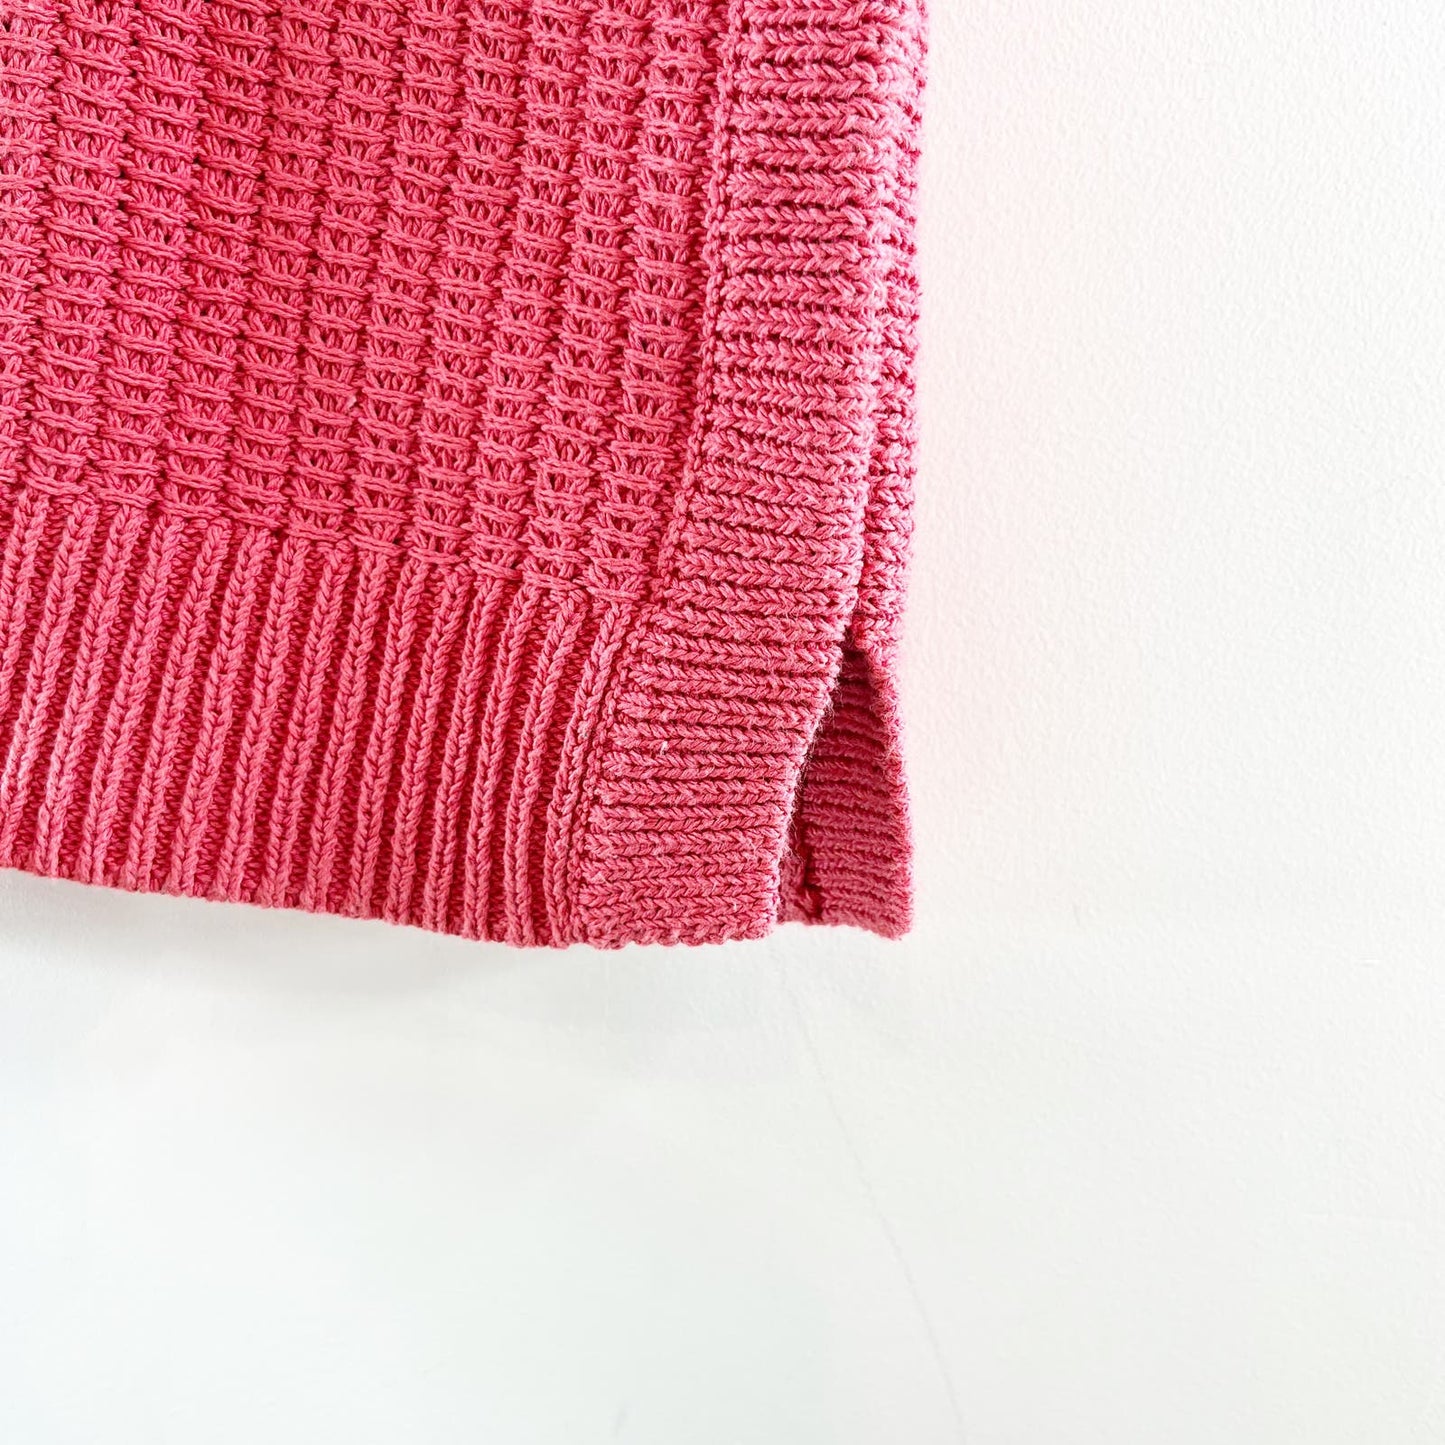 Madewell Stockton Cotton Crochet Knit Sweater Tank Top Berry Red XXS